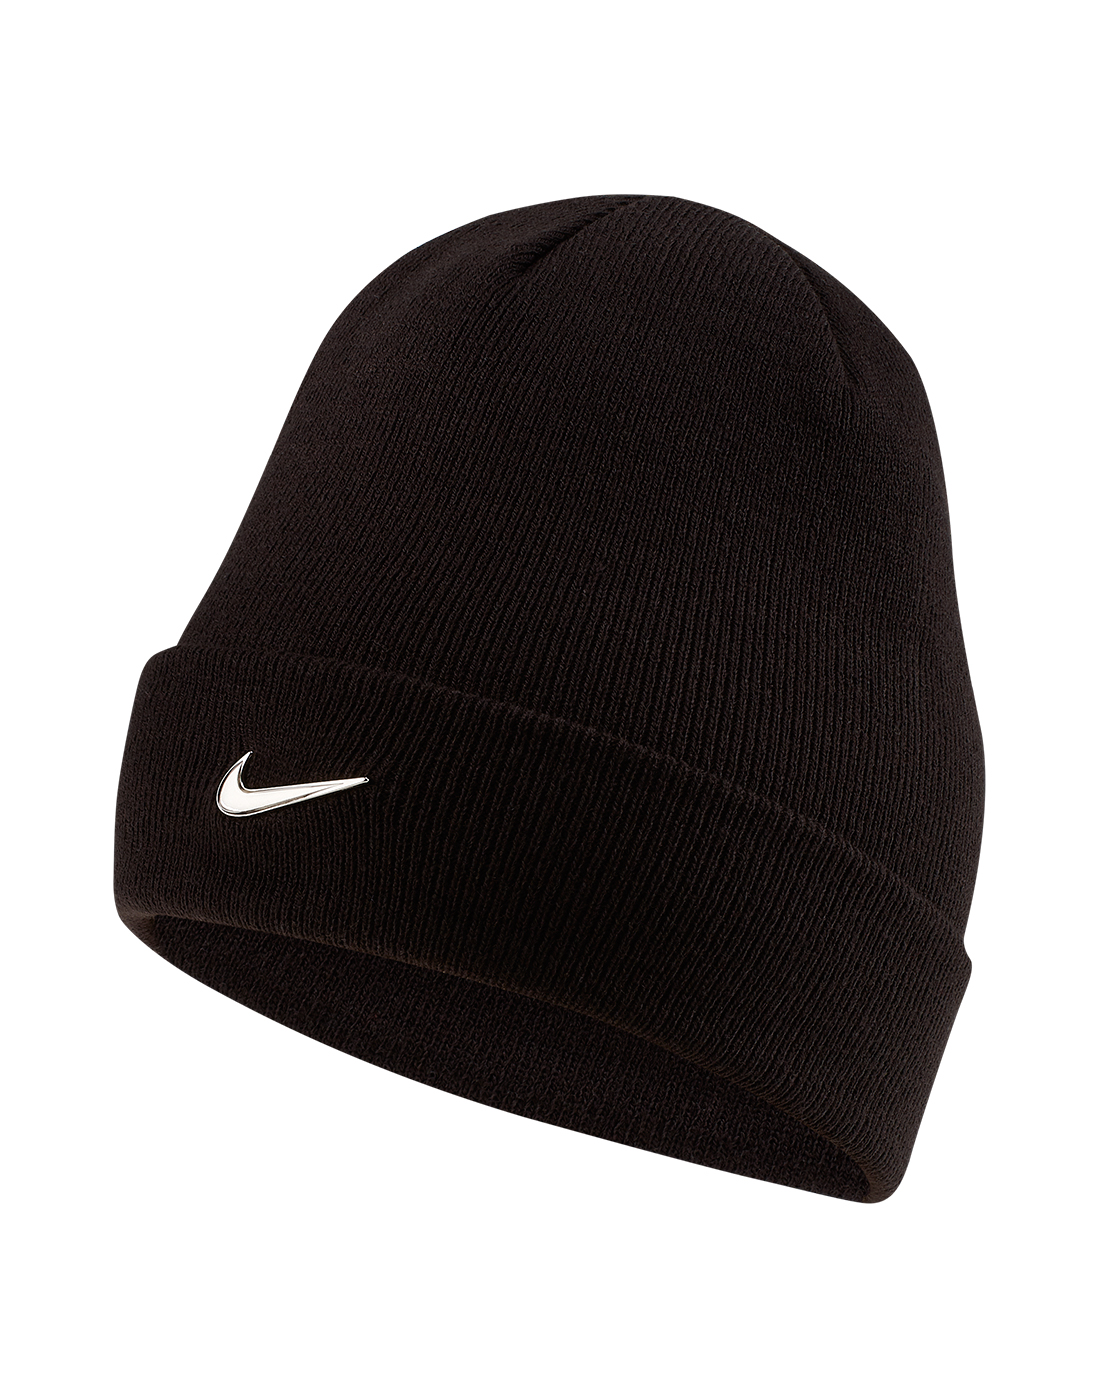 Nike Swoosh Woolly Hat - Black | Life Style Sports UK